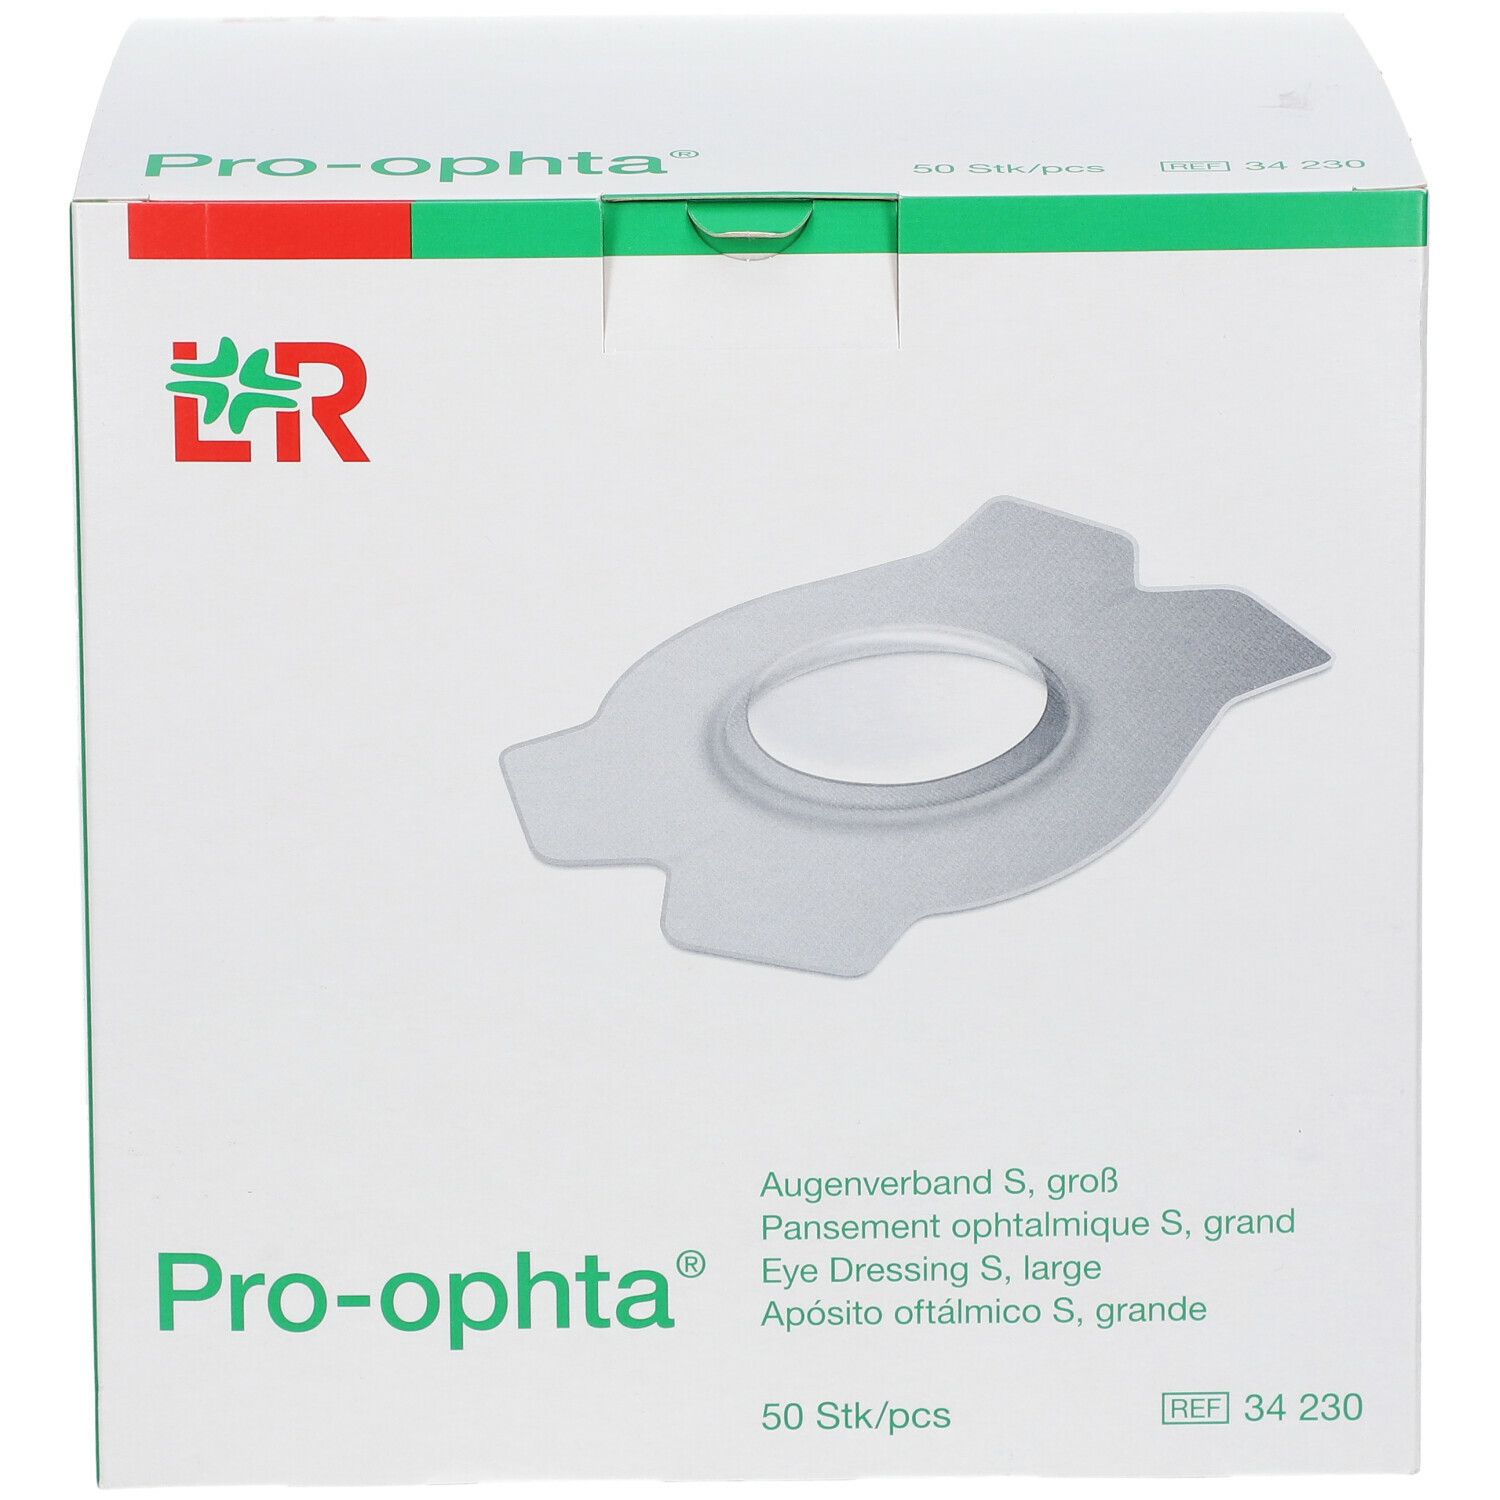 Pro-ophta® Augenverband S